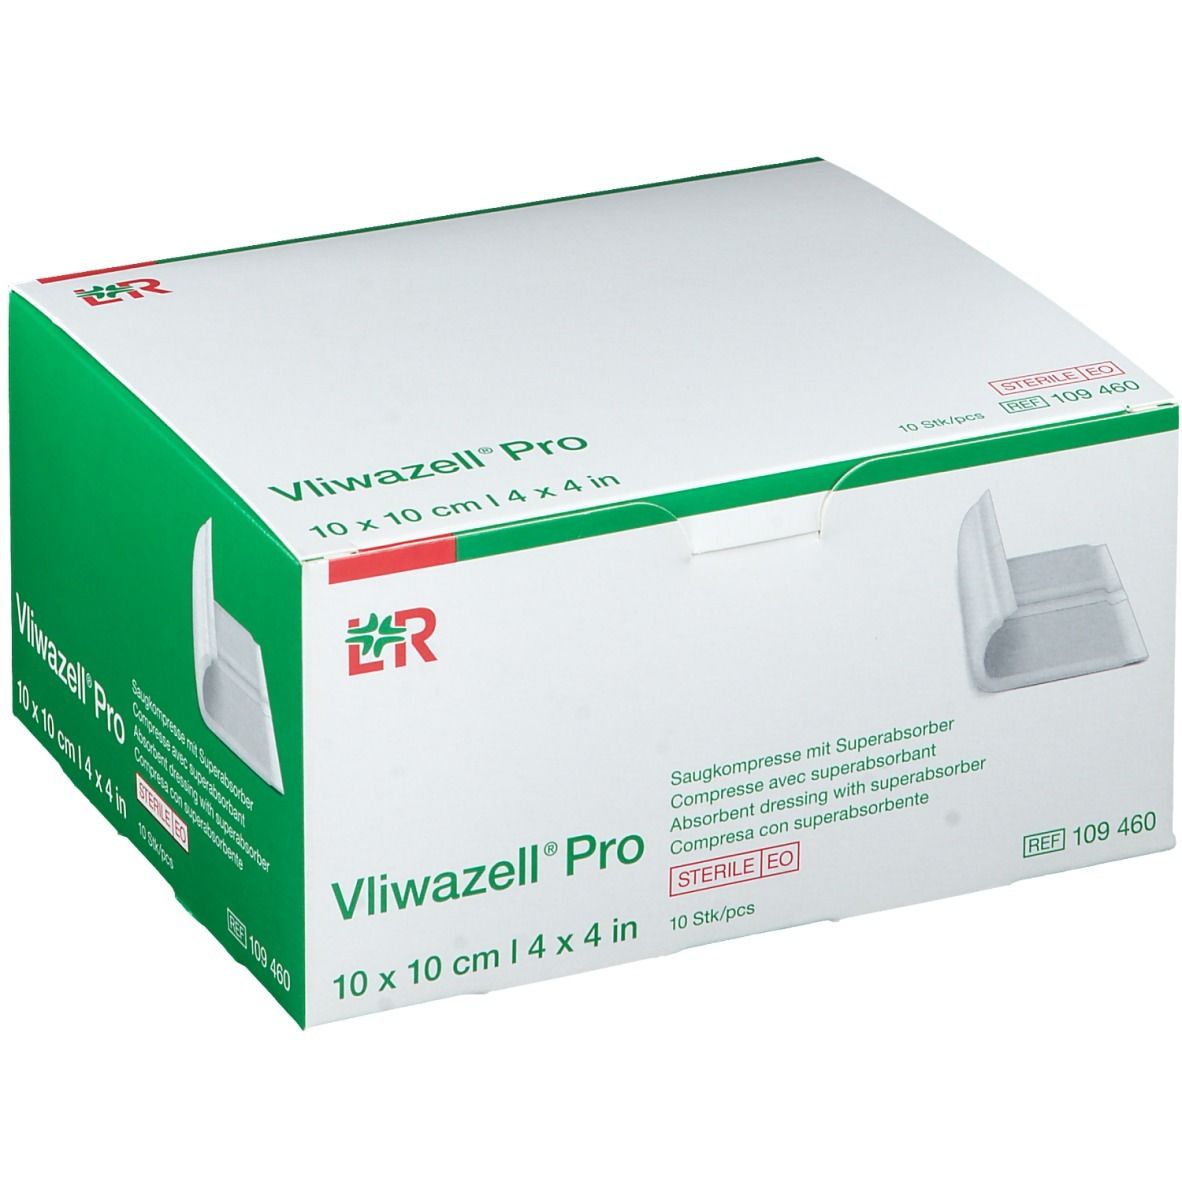 Image of Vliwazell® Pro 10 x 10 cm